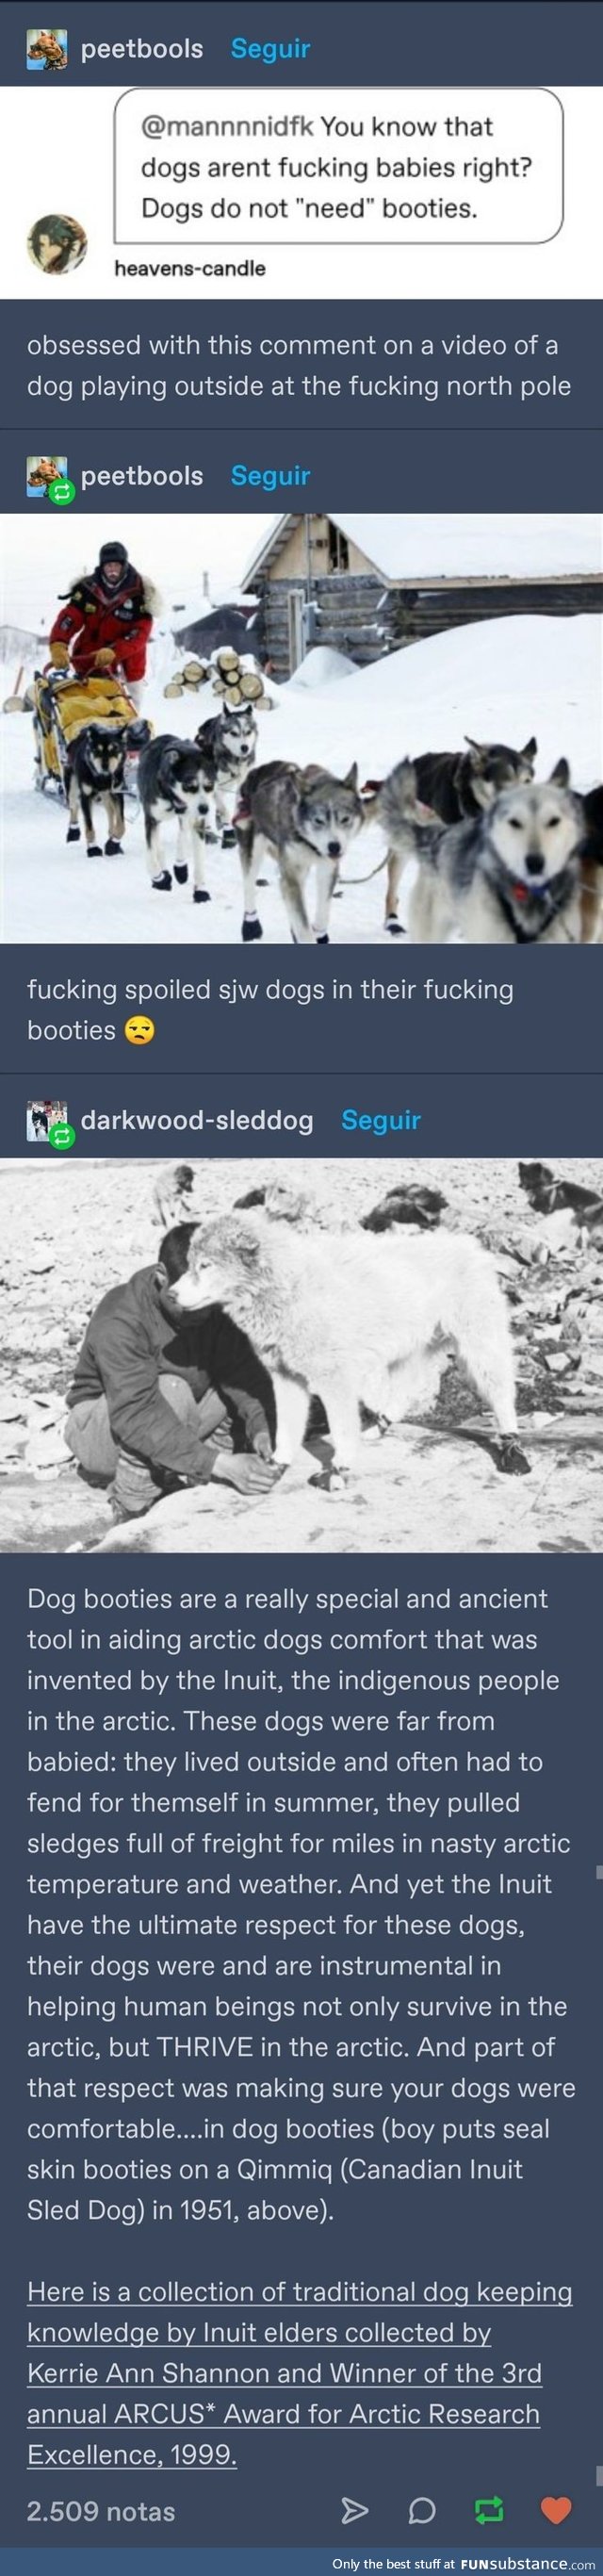 Dog booties